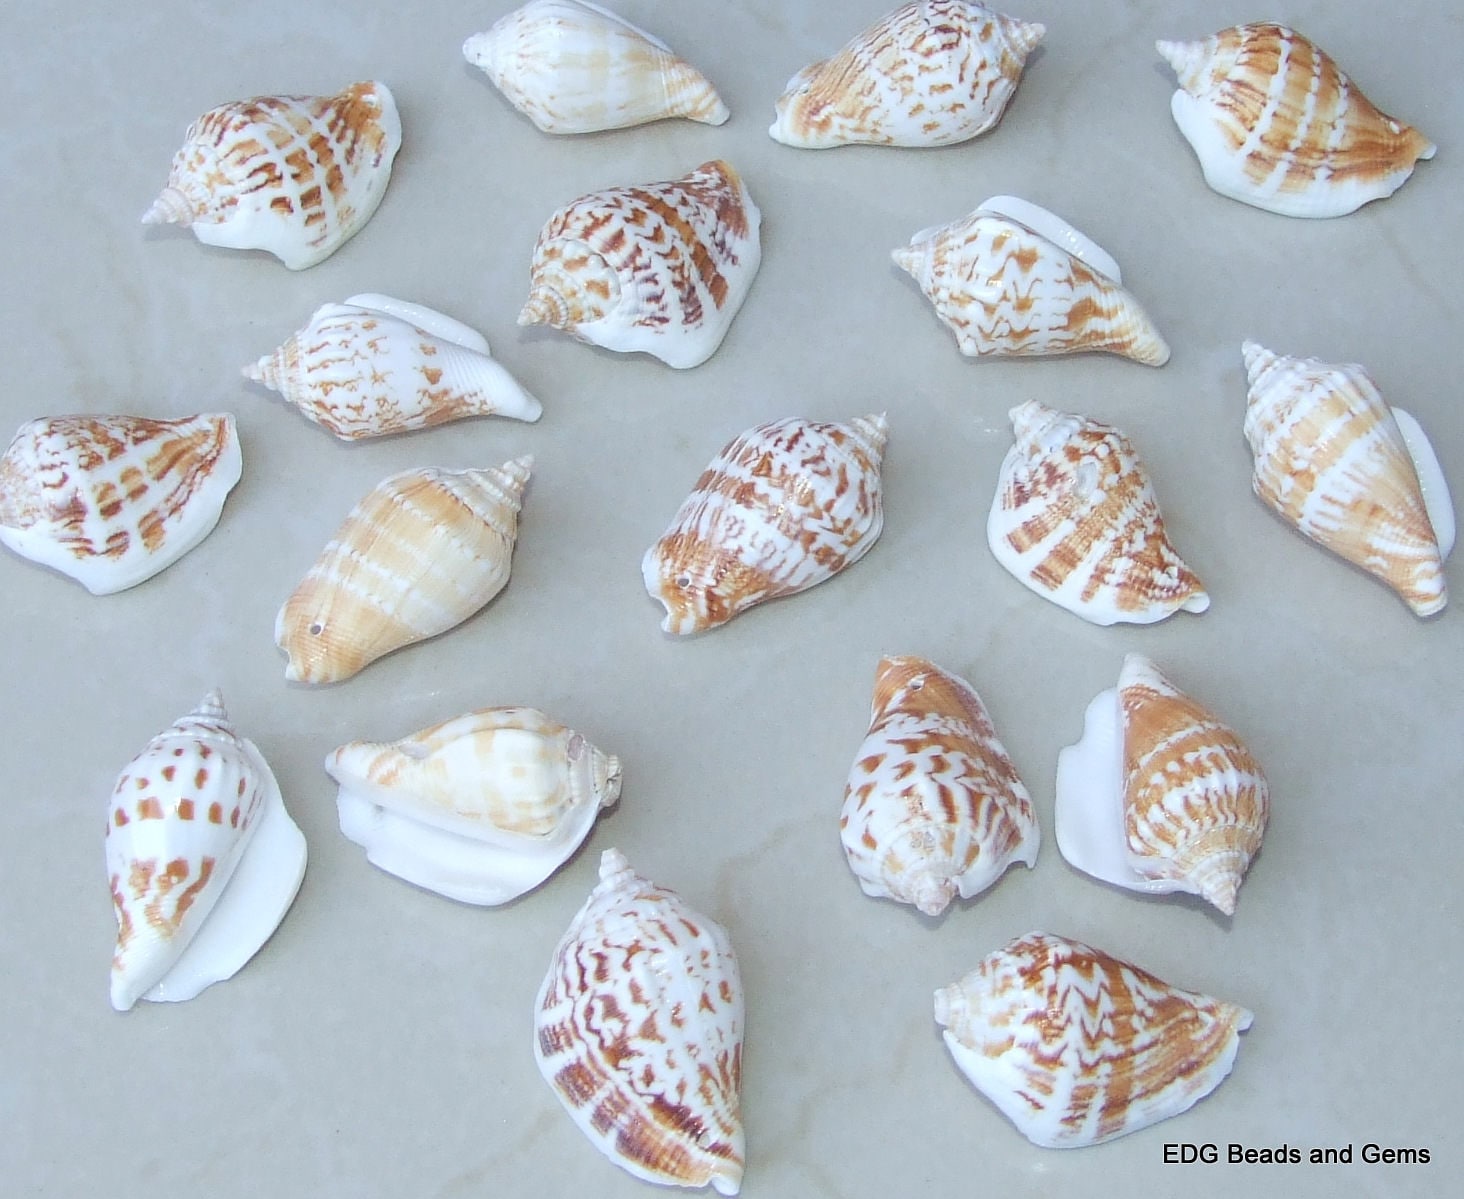 4 Large Natural Conch Sea Shell, Spiral Shell Bead, Seashell, Shell Bead, Beach Decor, Ocean Shells, Shell Jewelry, 40mm - 45mm, 007-57